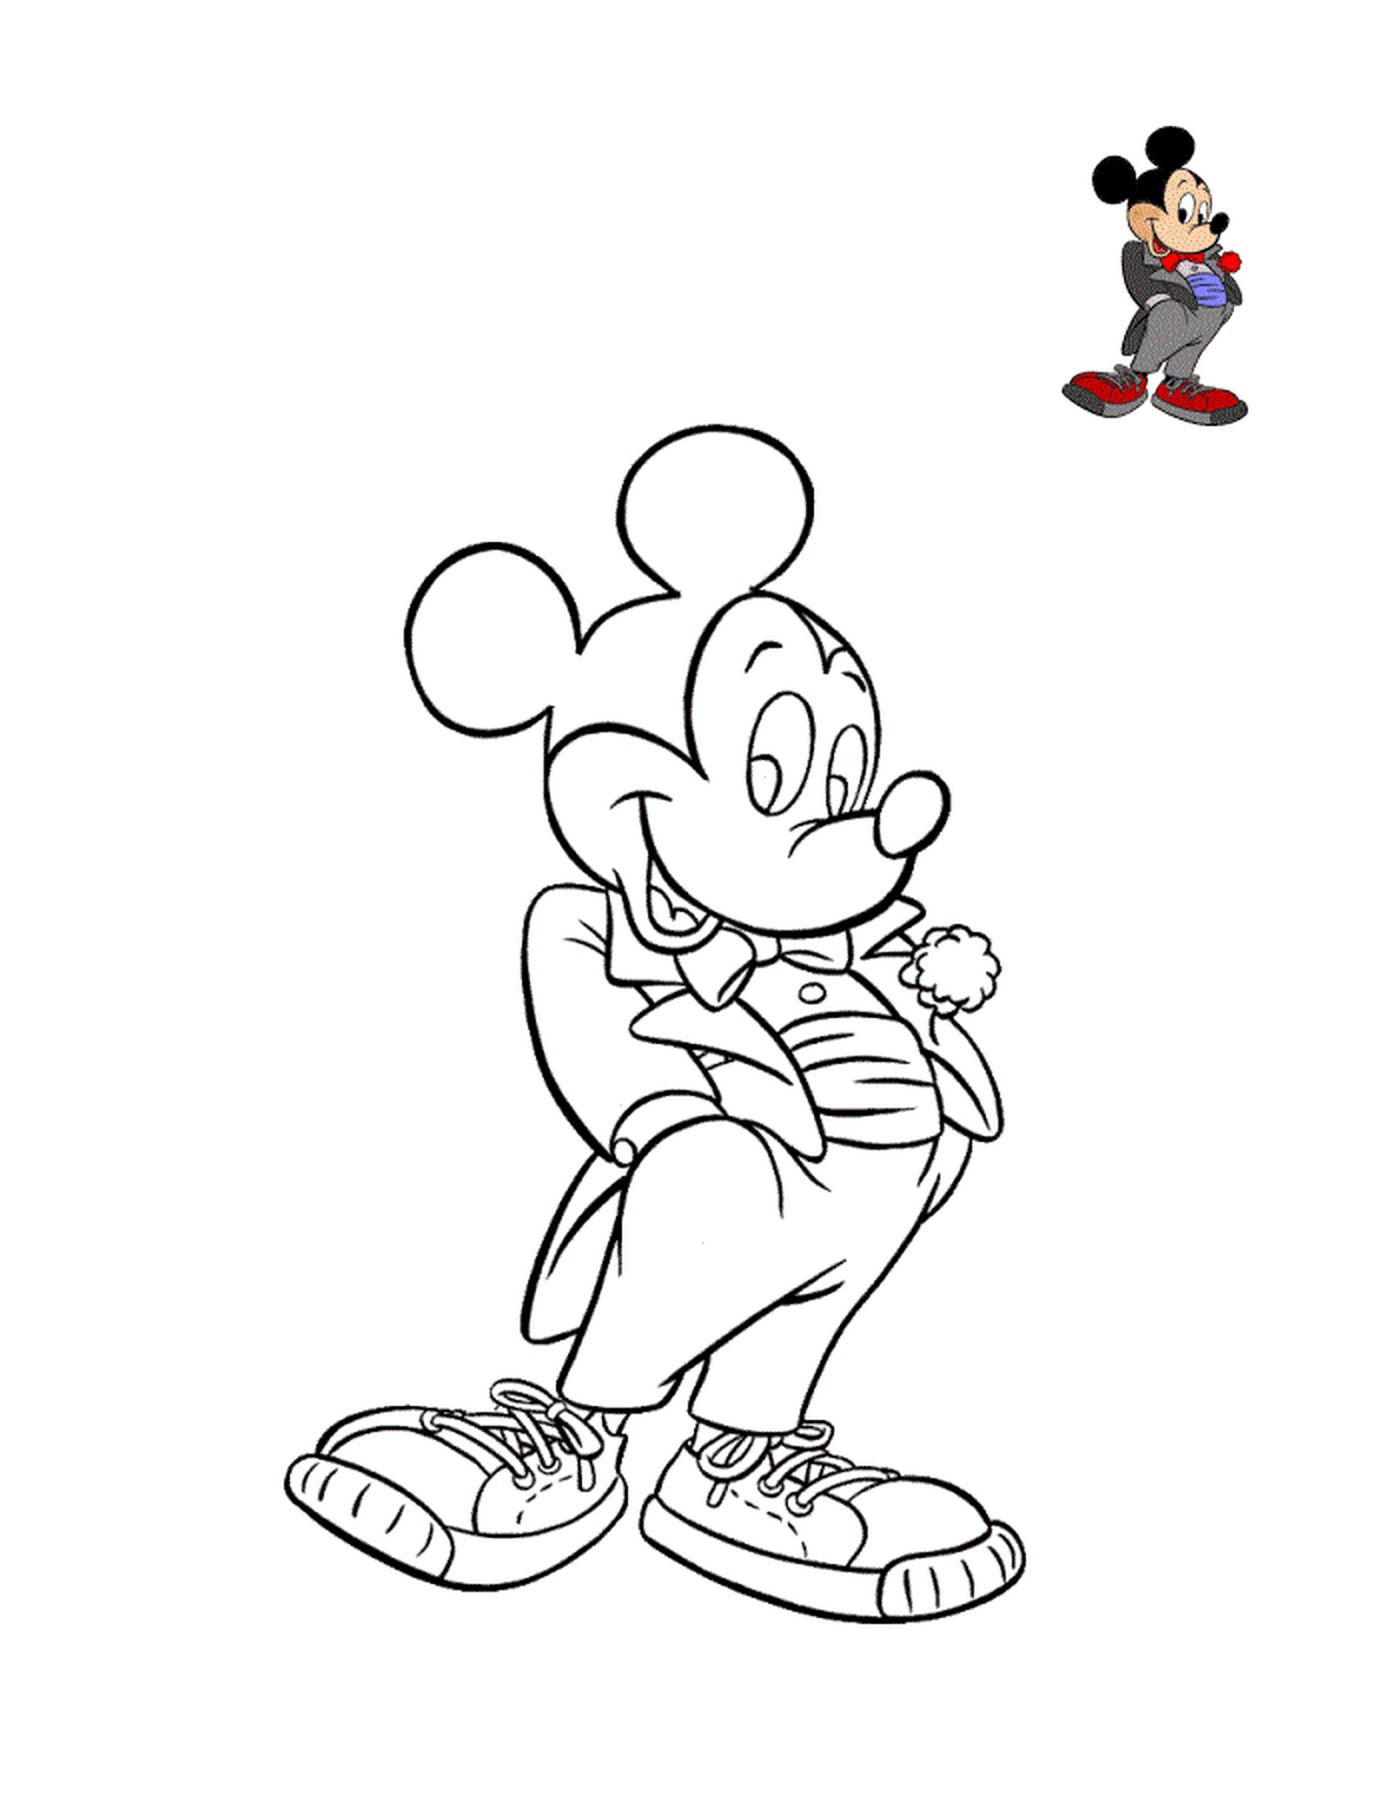  Mickey Disney, chic costume for the graduation ball 